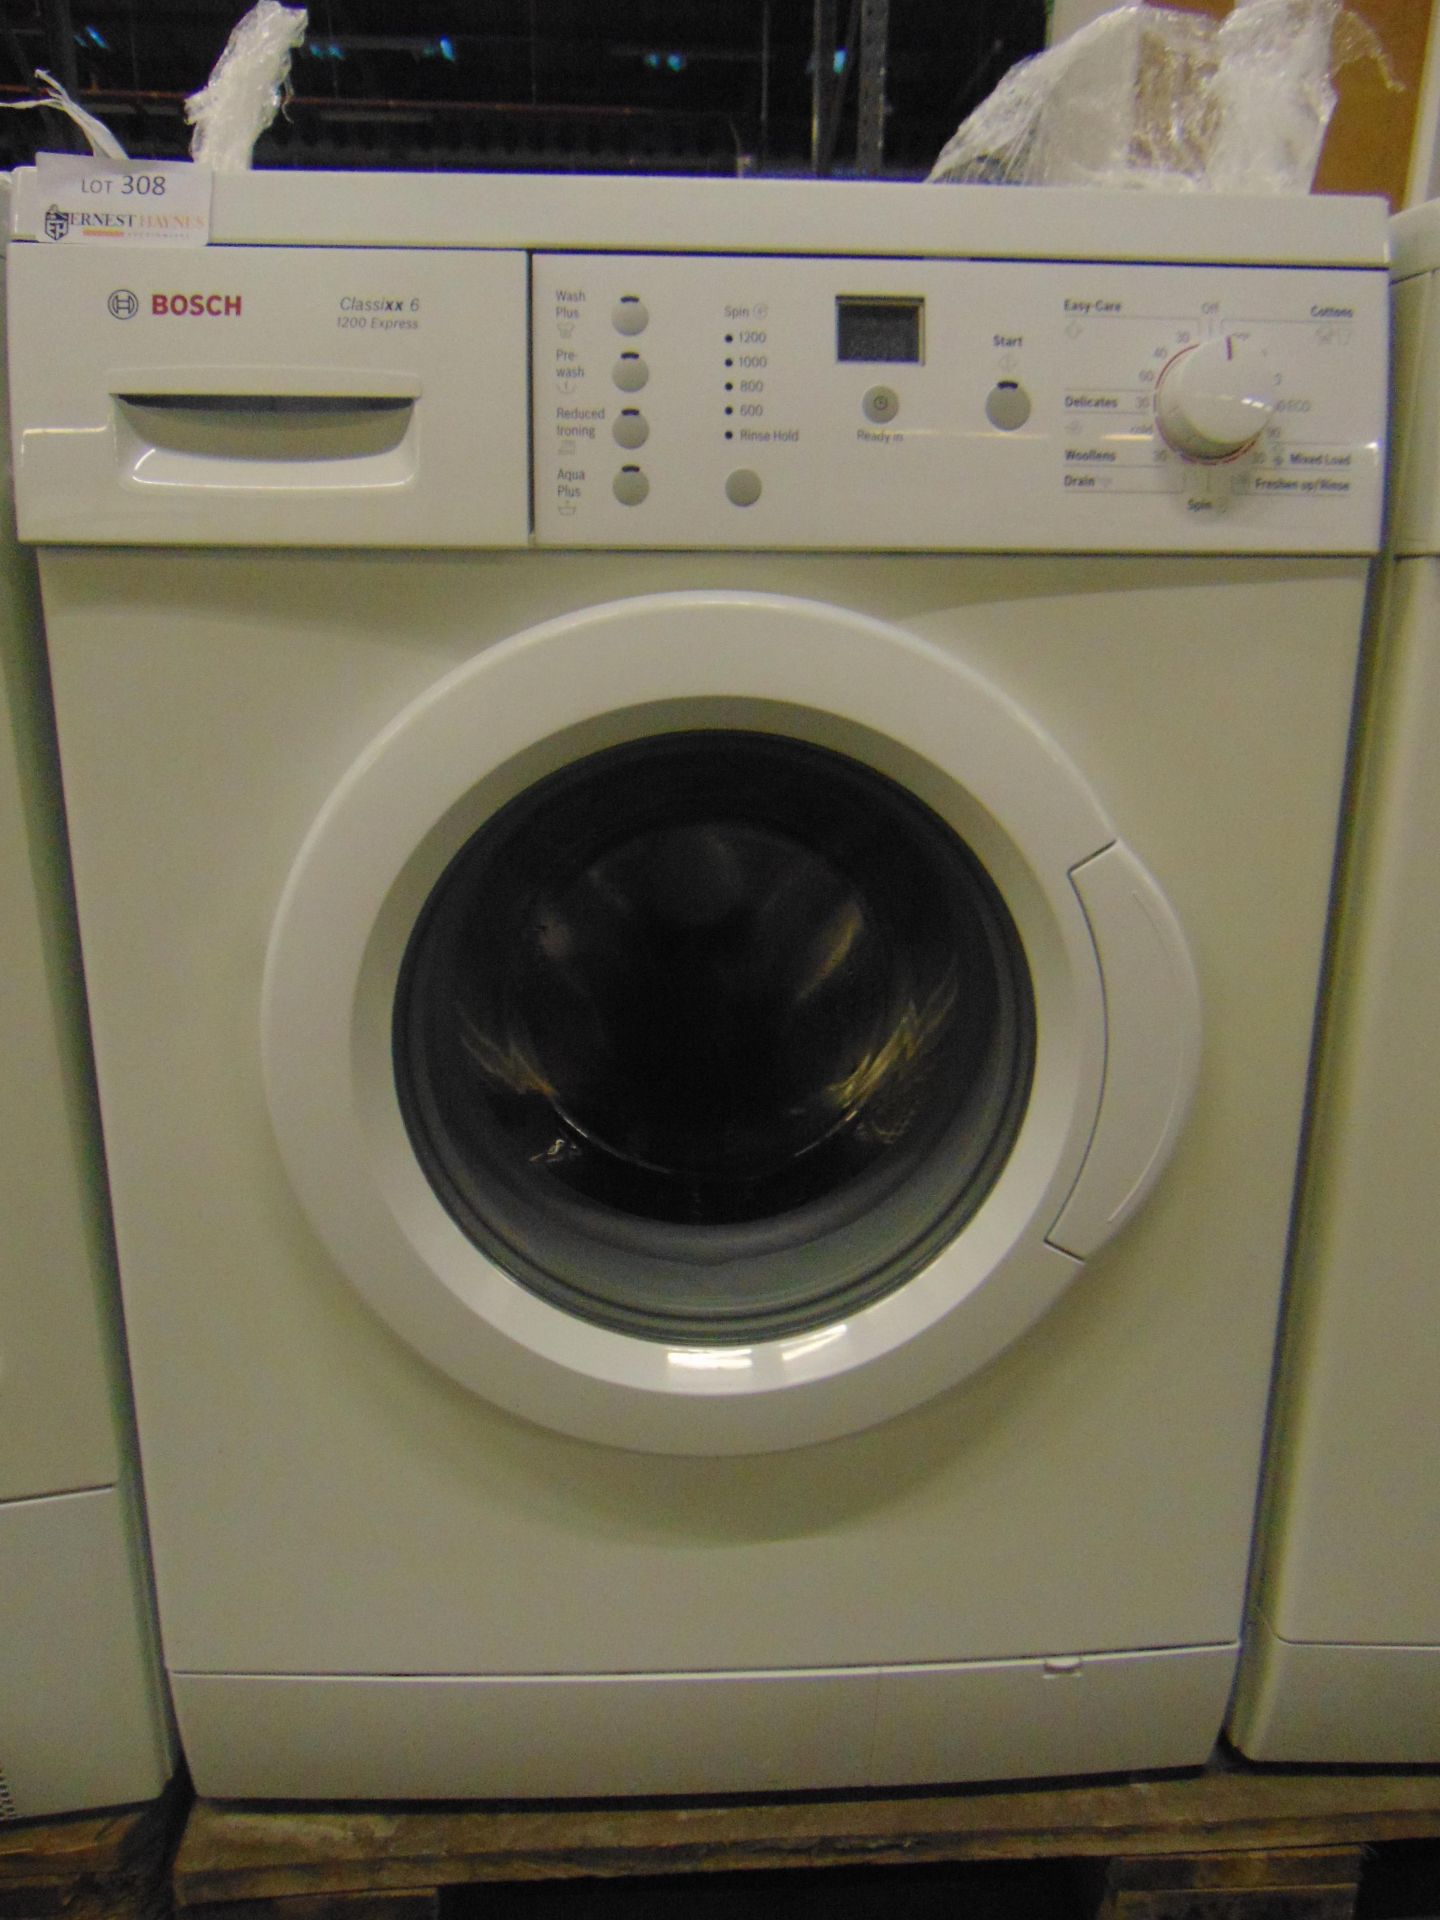 Bosch classixx 6, 1200 express washing machine, Fully refurbished and working, 3 months warranty